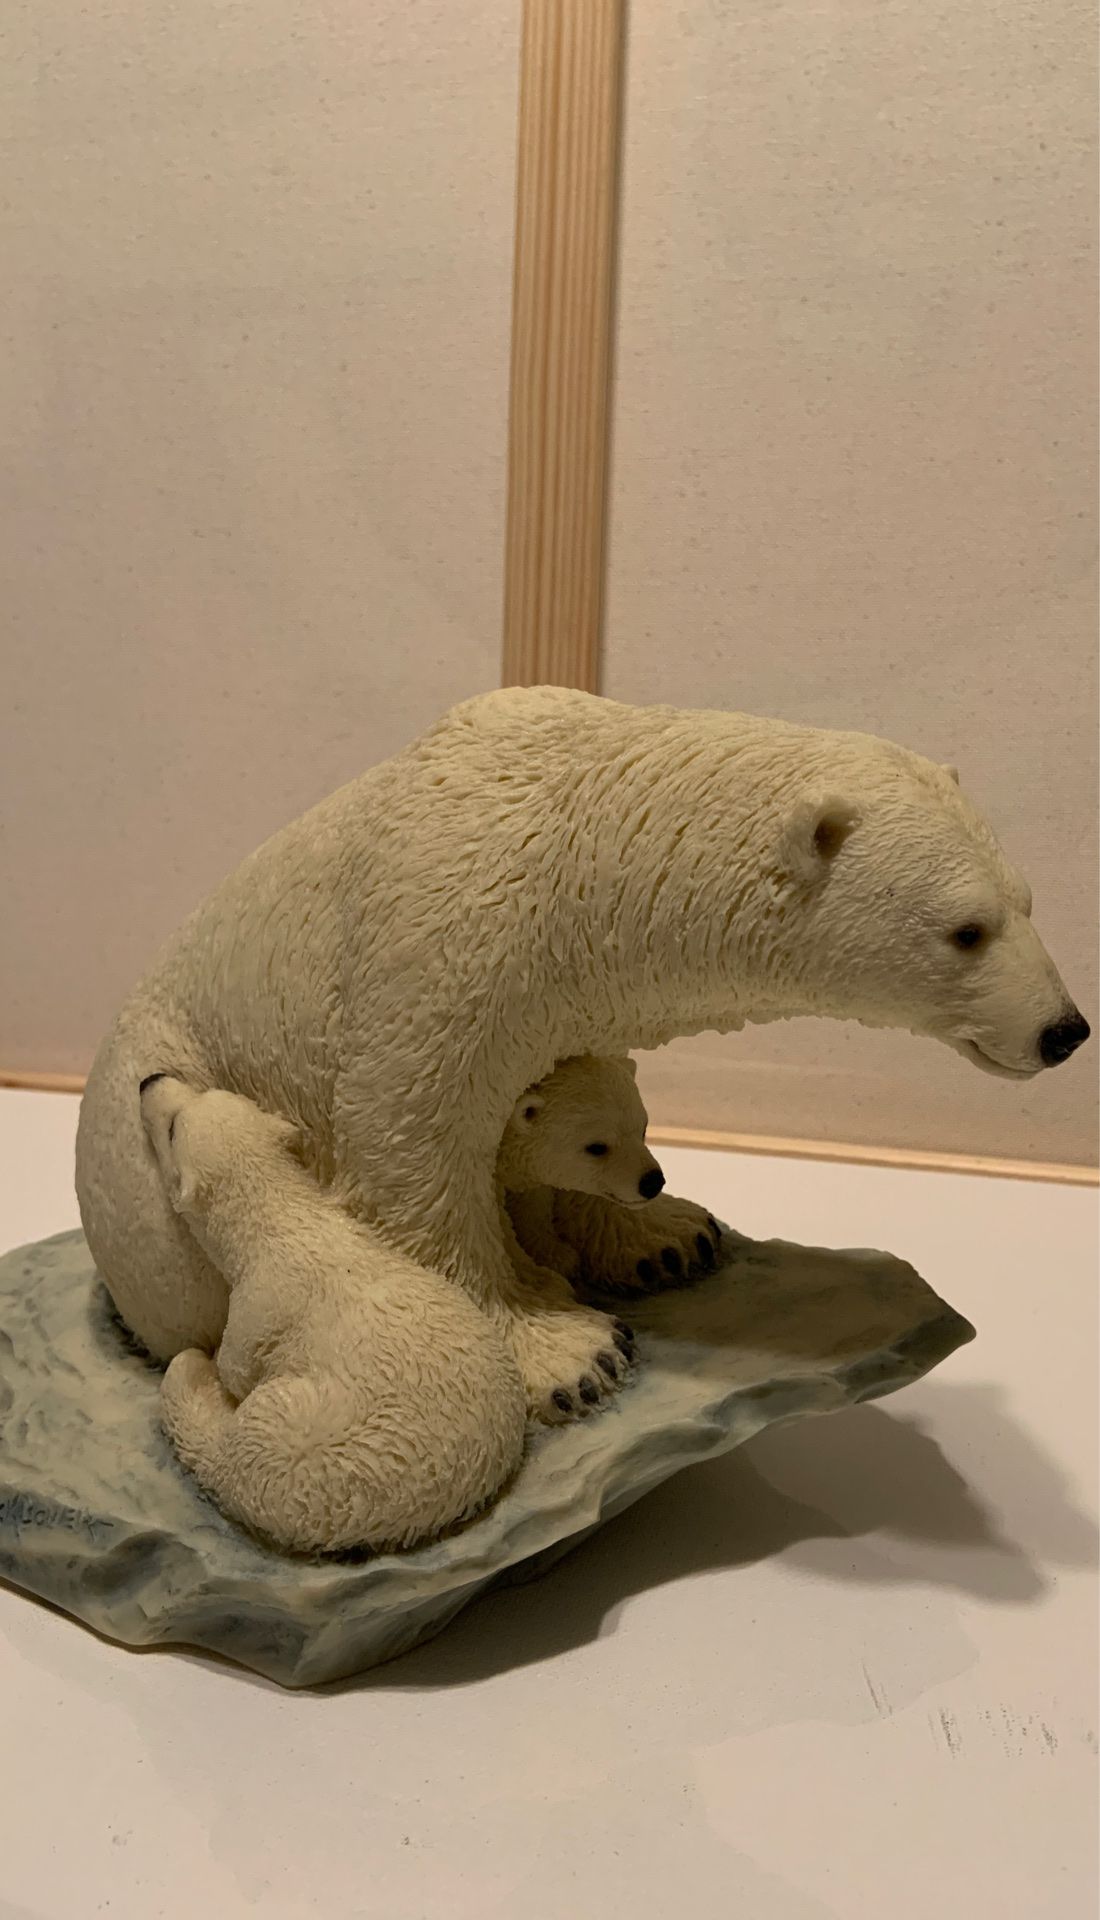 1997 Mill Creek Studios “Just Barely “ Polar Bear sculpture